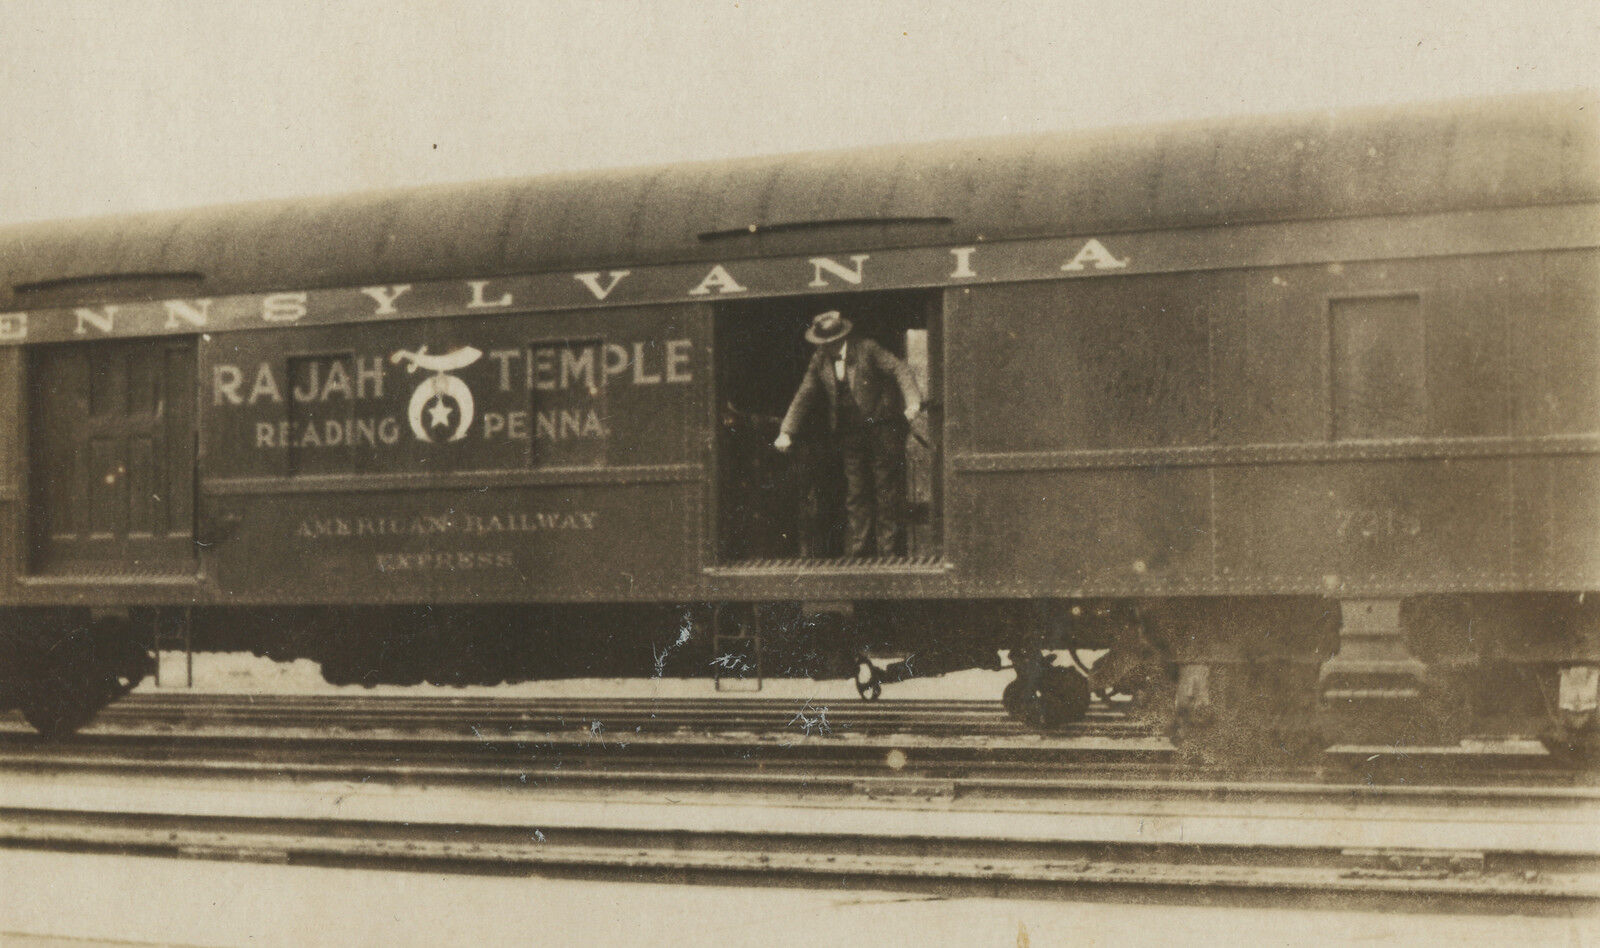 ANTIQUE 1920s AMERICAN RAILWAY EXPRESS RAJAH TEMPLE READING PA DARE DEVIL PHOTO 